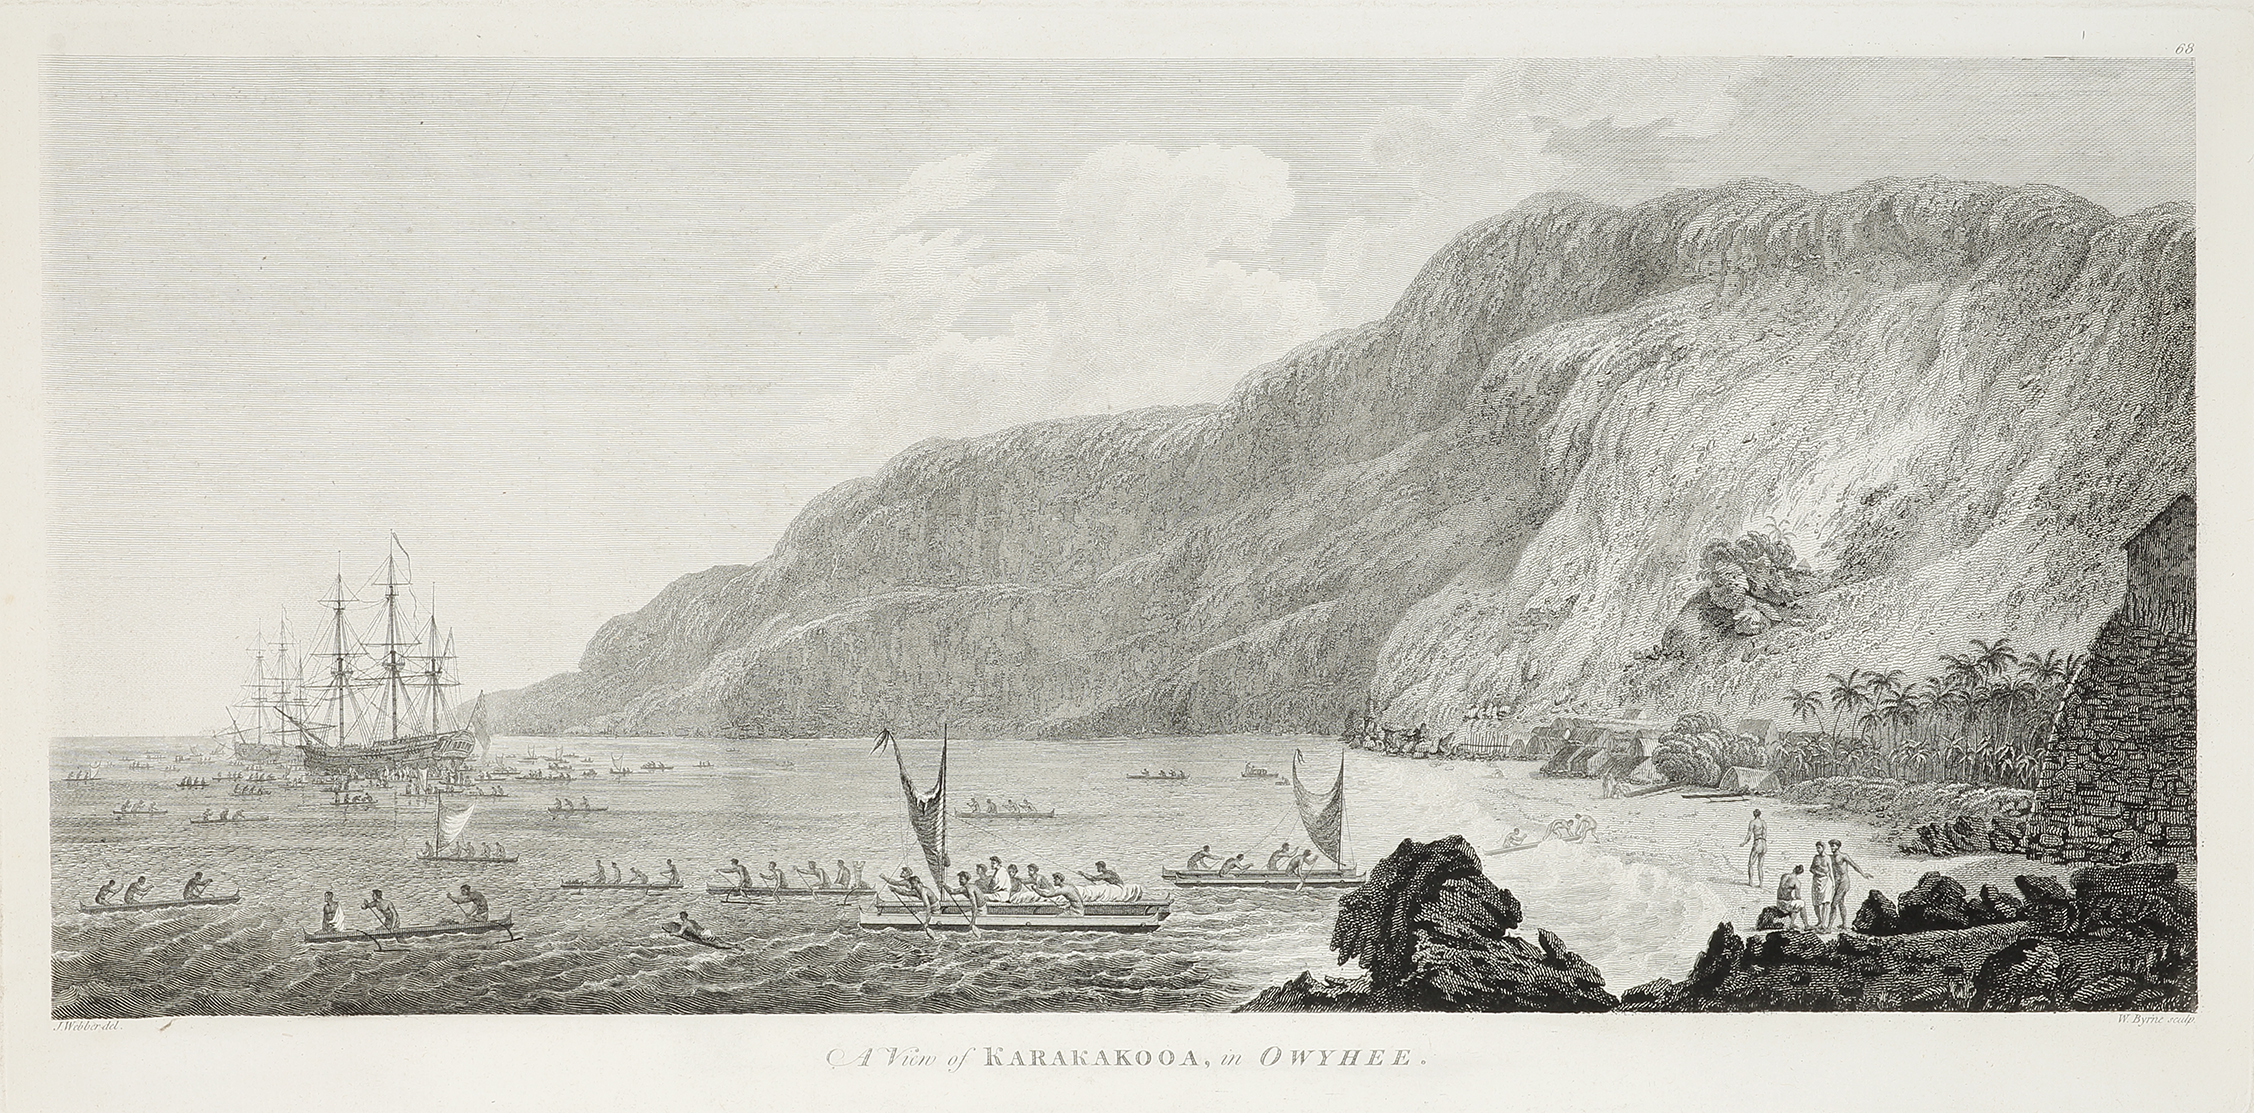 A View of Karakakooa, in Owyhee. - Antique View from 1784